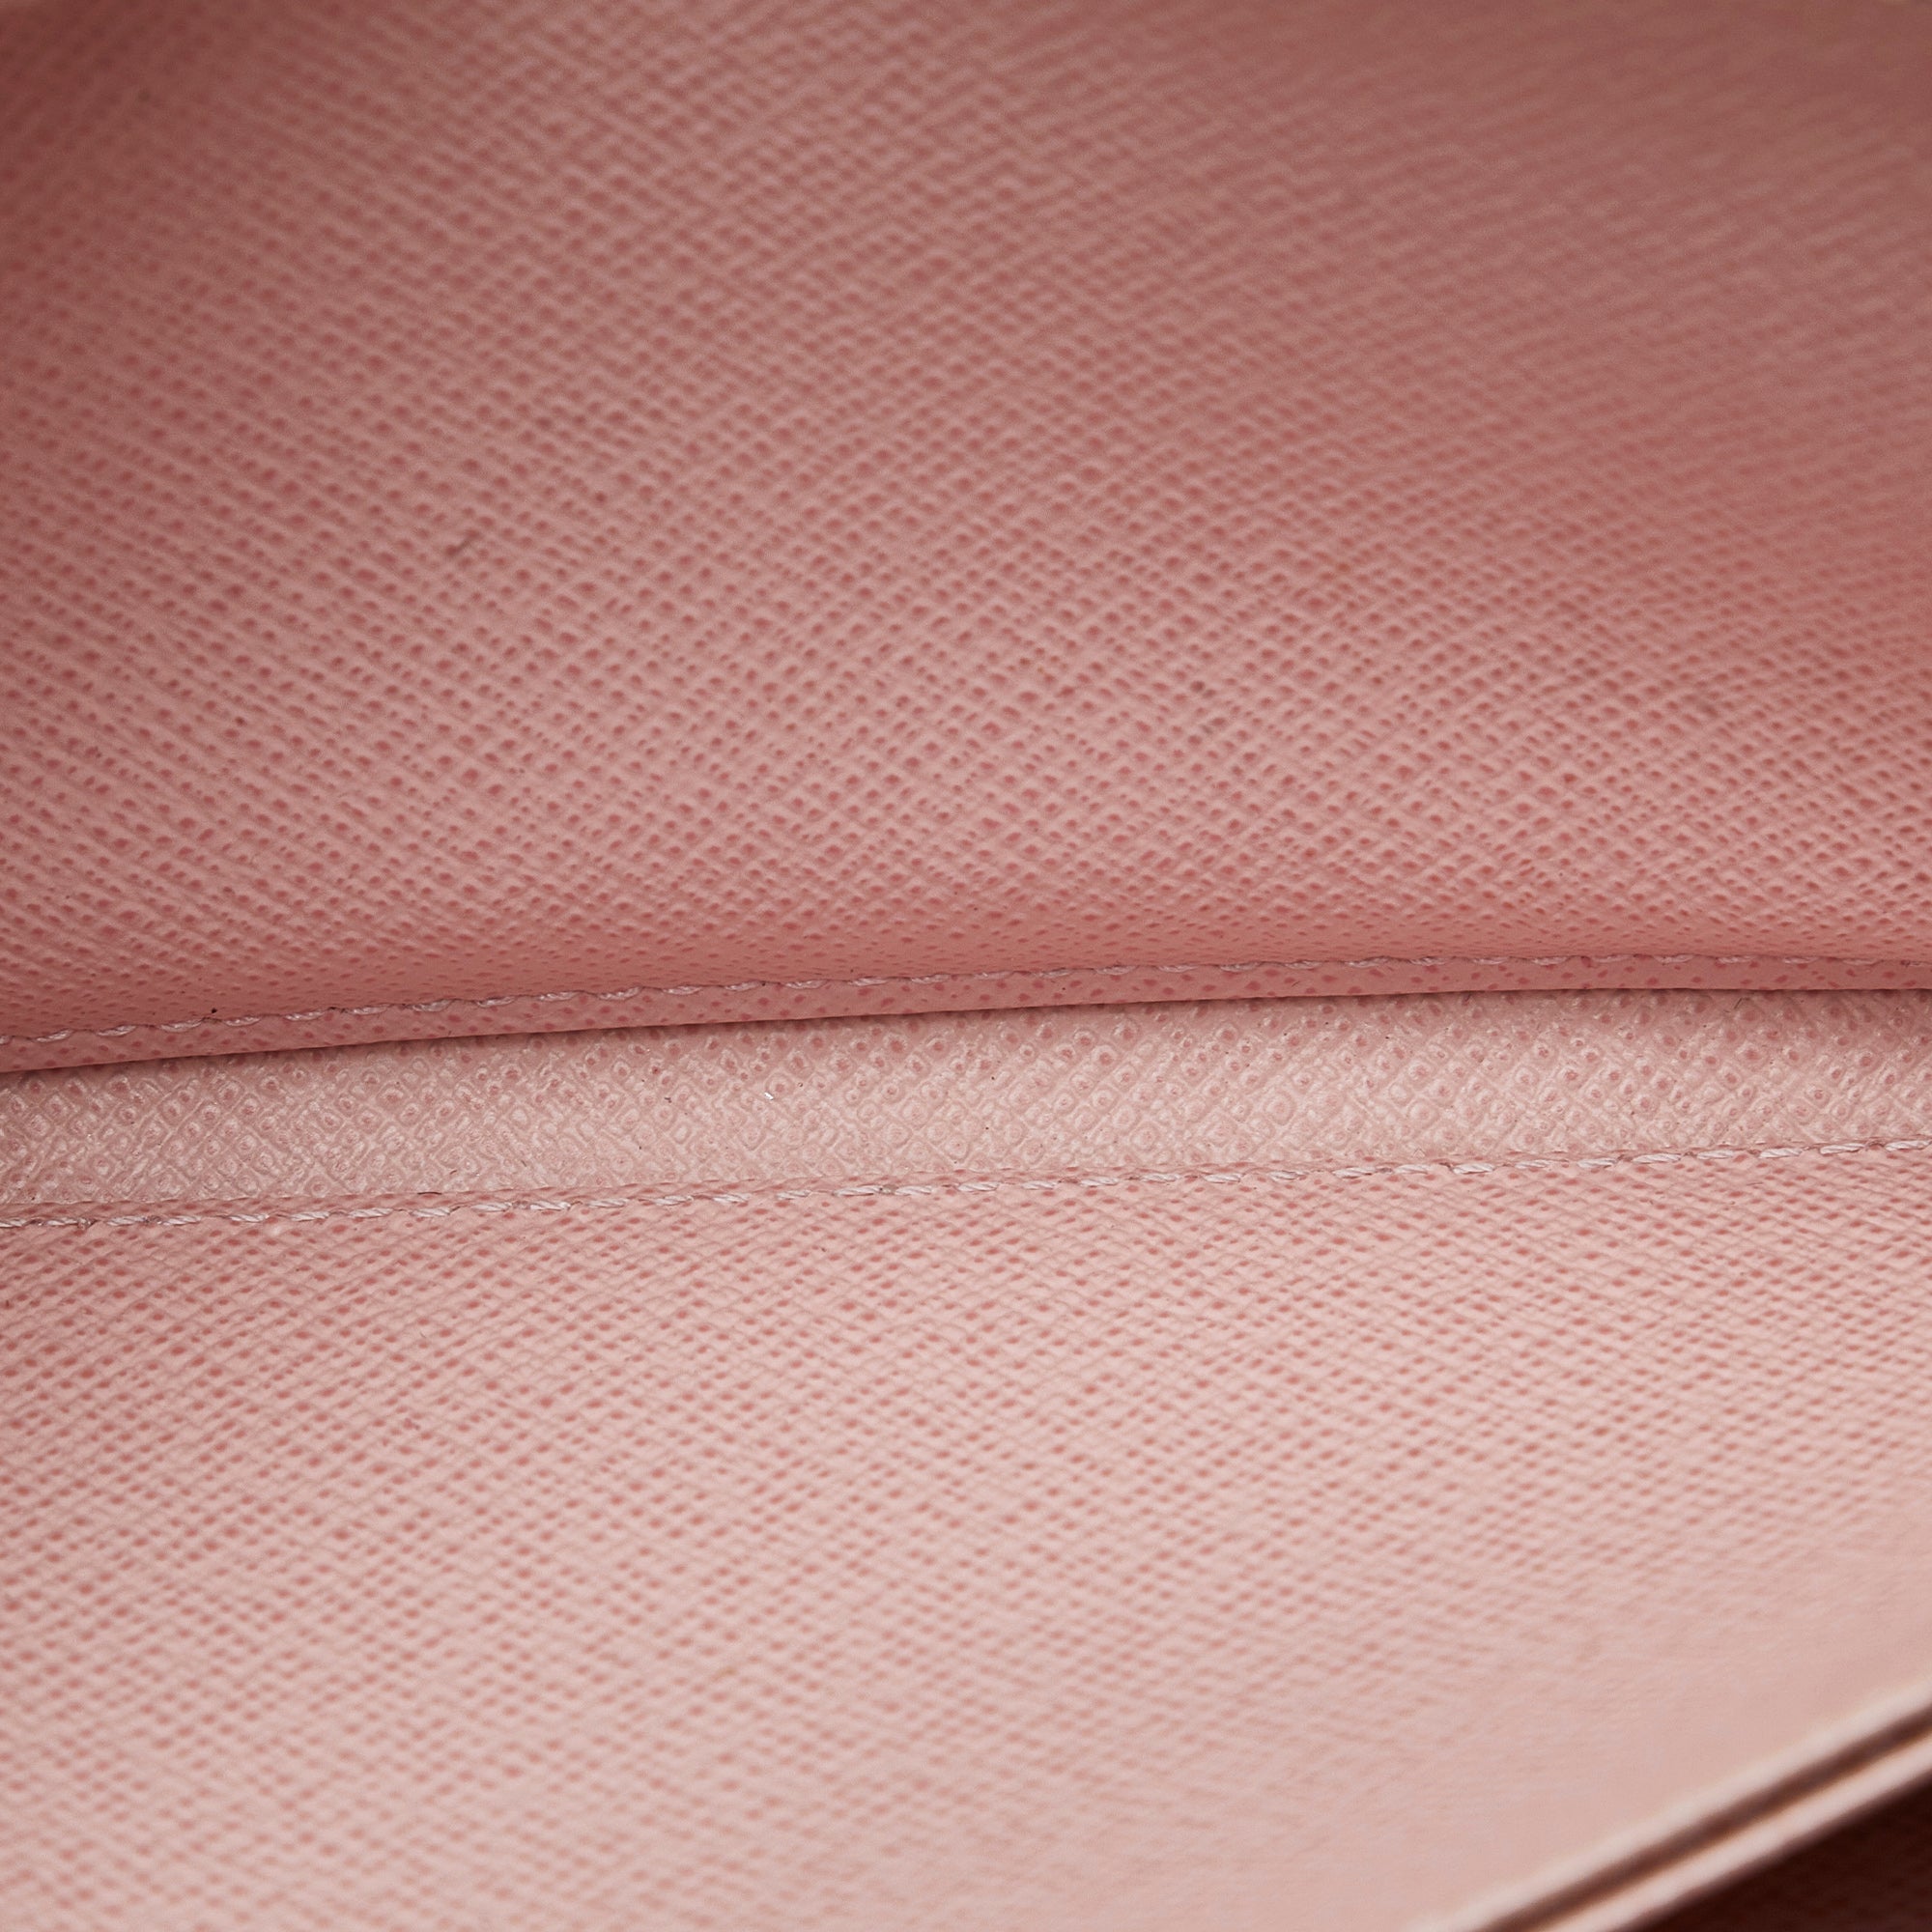 Brown Louis Vuitton Damier Ebene Zippy Compact Wallet – Designer Revival